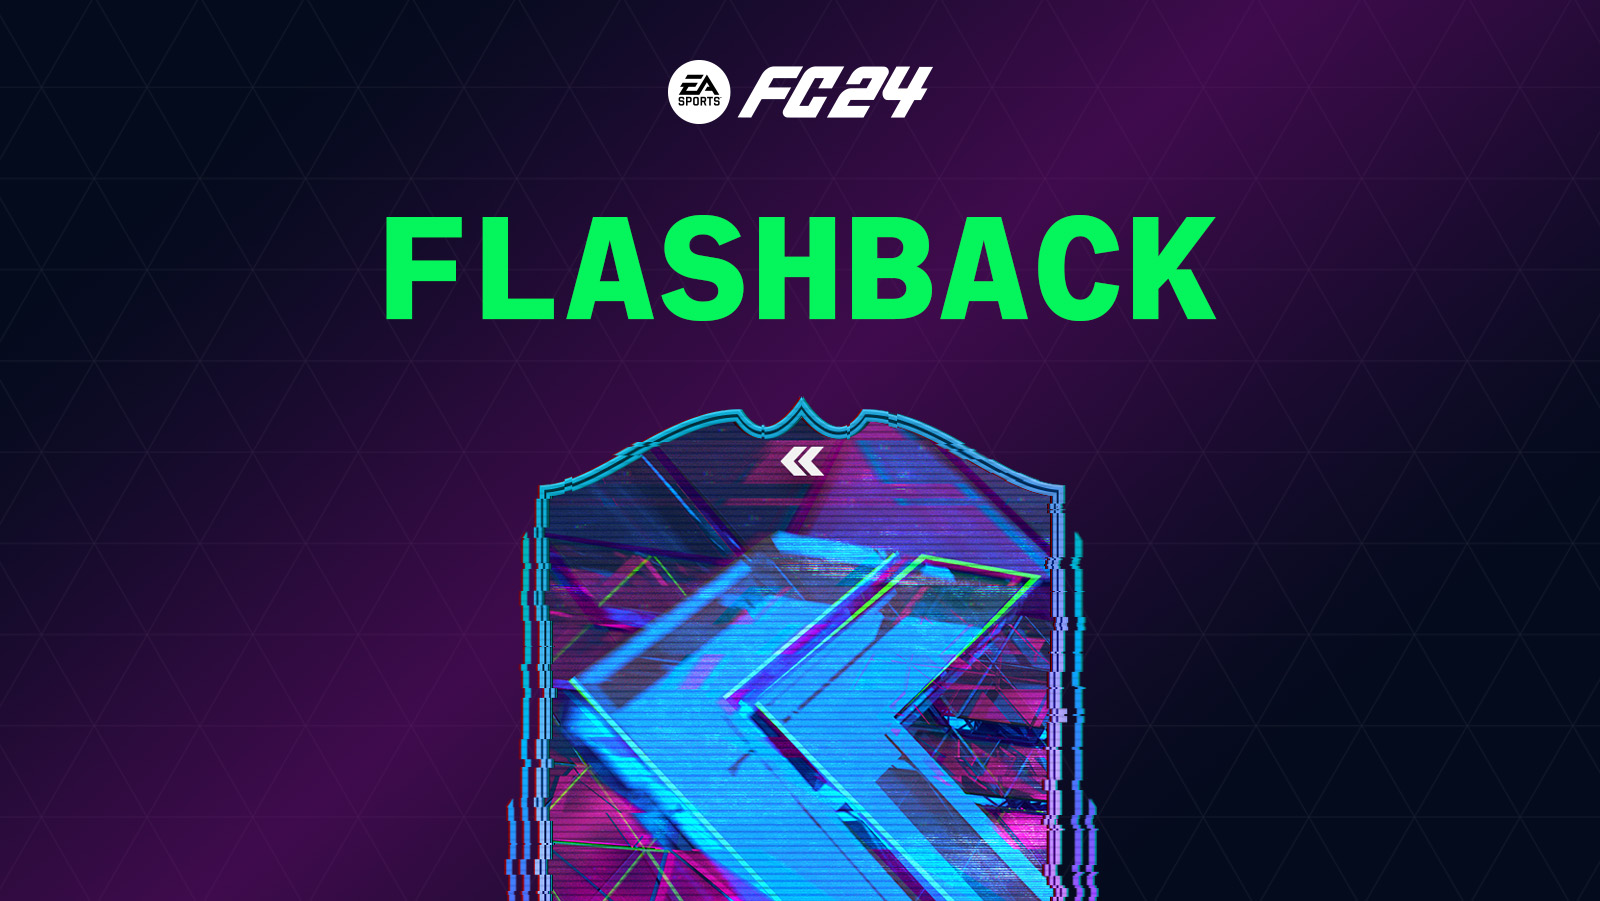 FC 24 Flashback